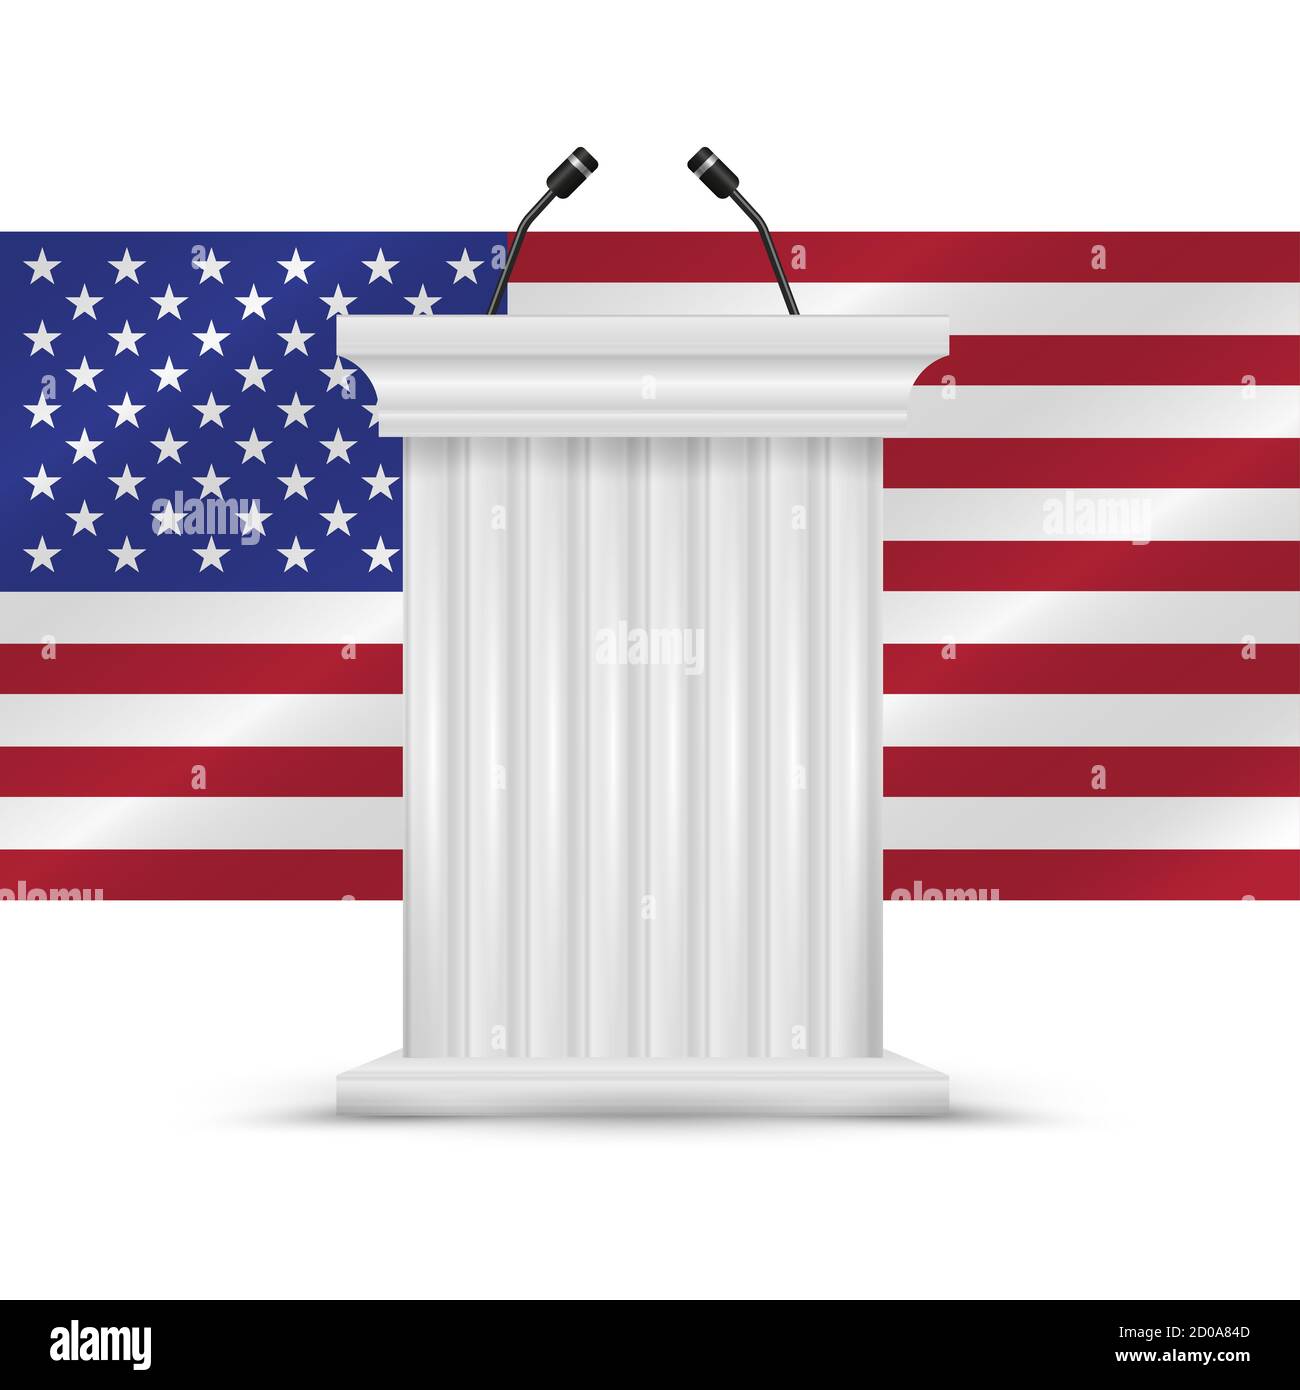 White tribune for political debate. 2020 United States presidential election. illustration. Stock Photo